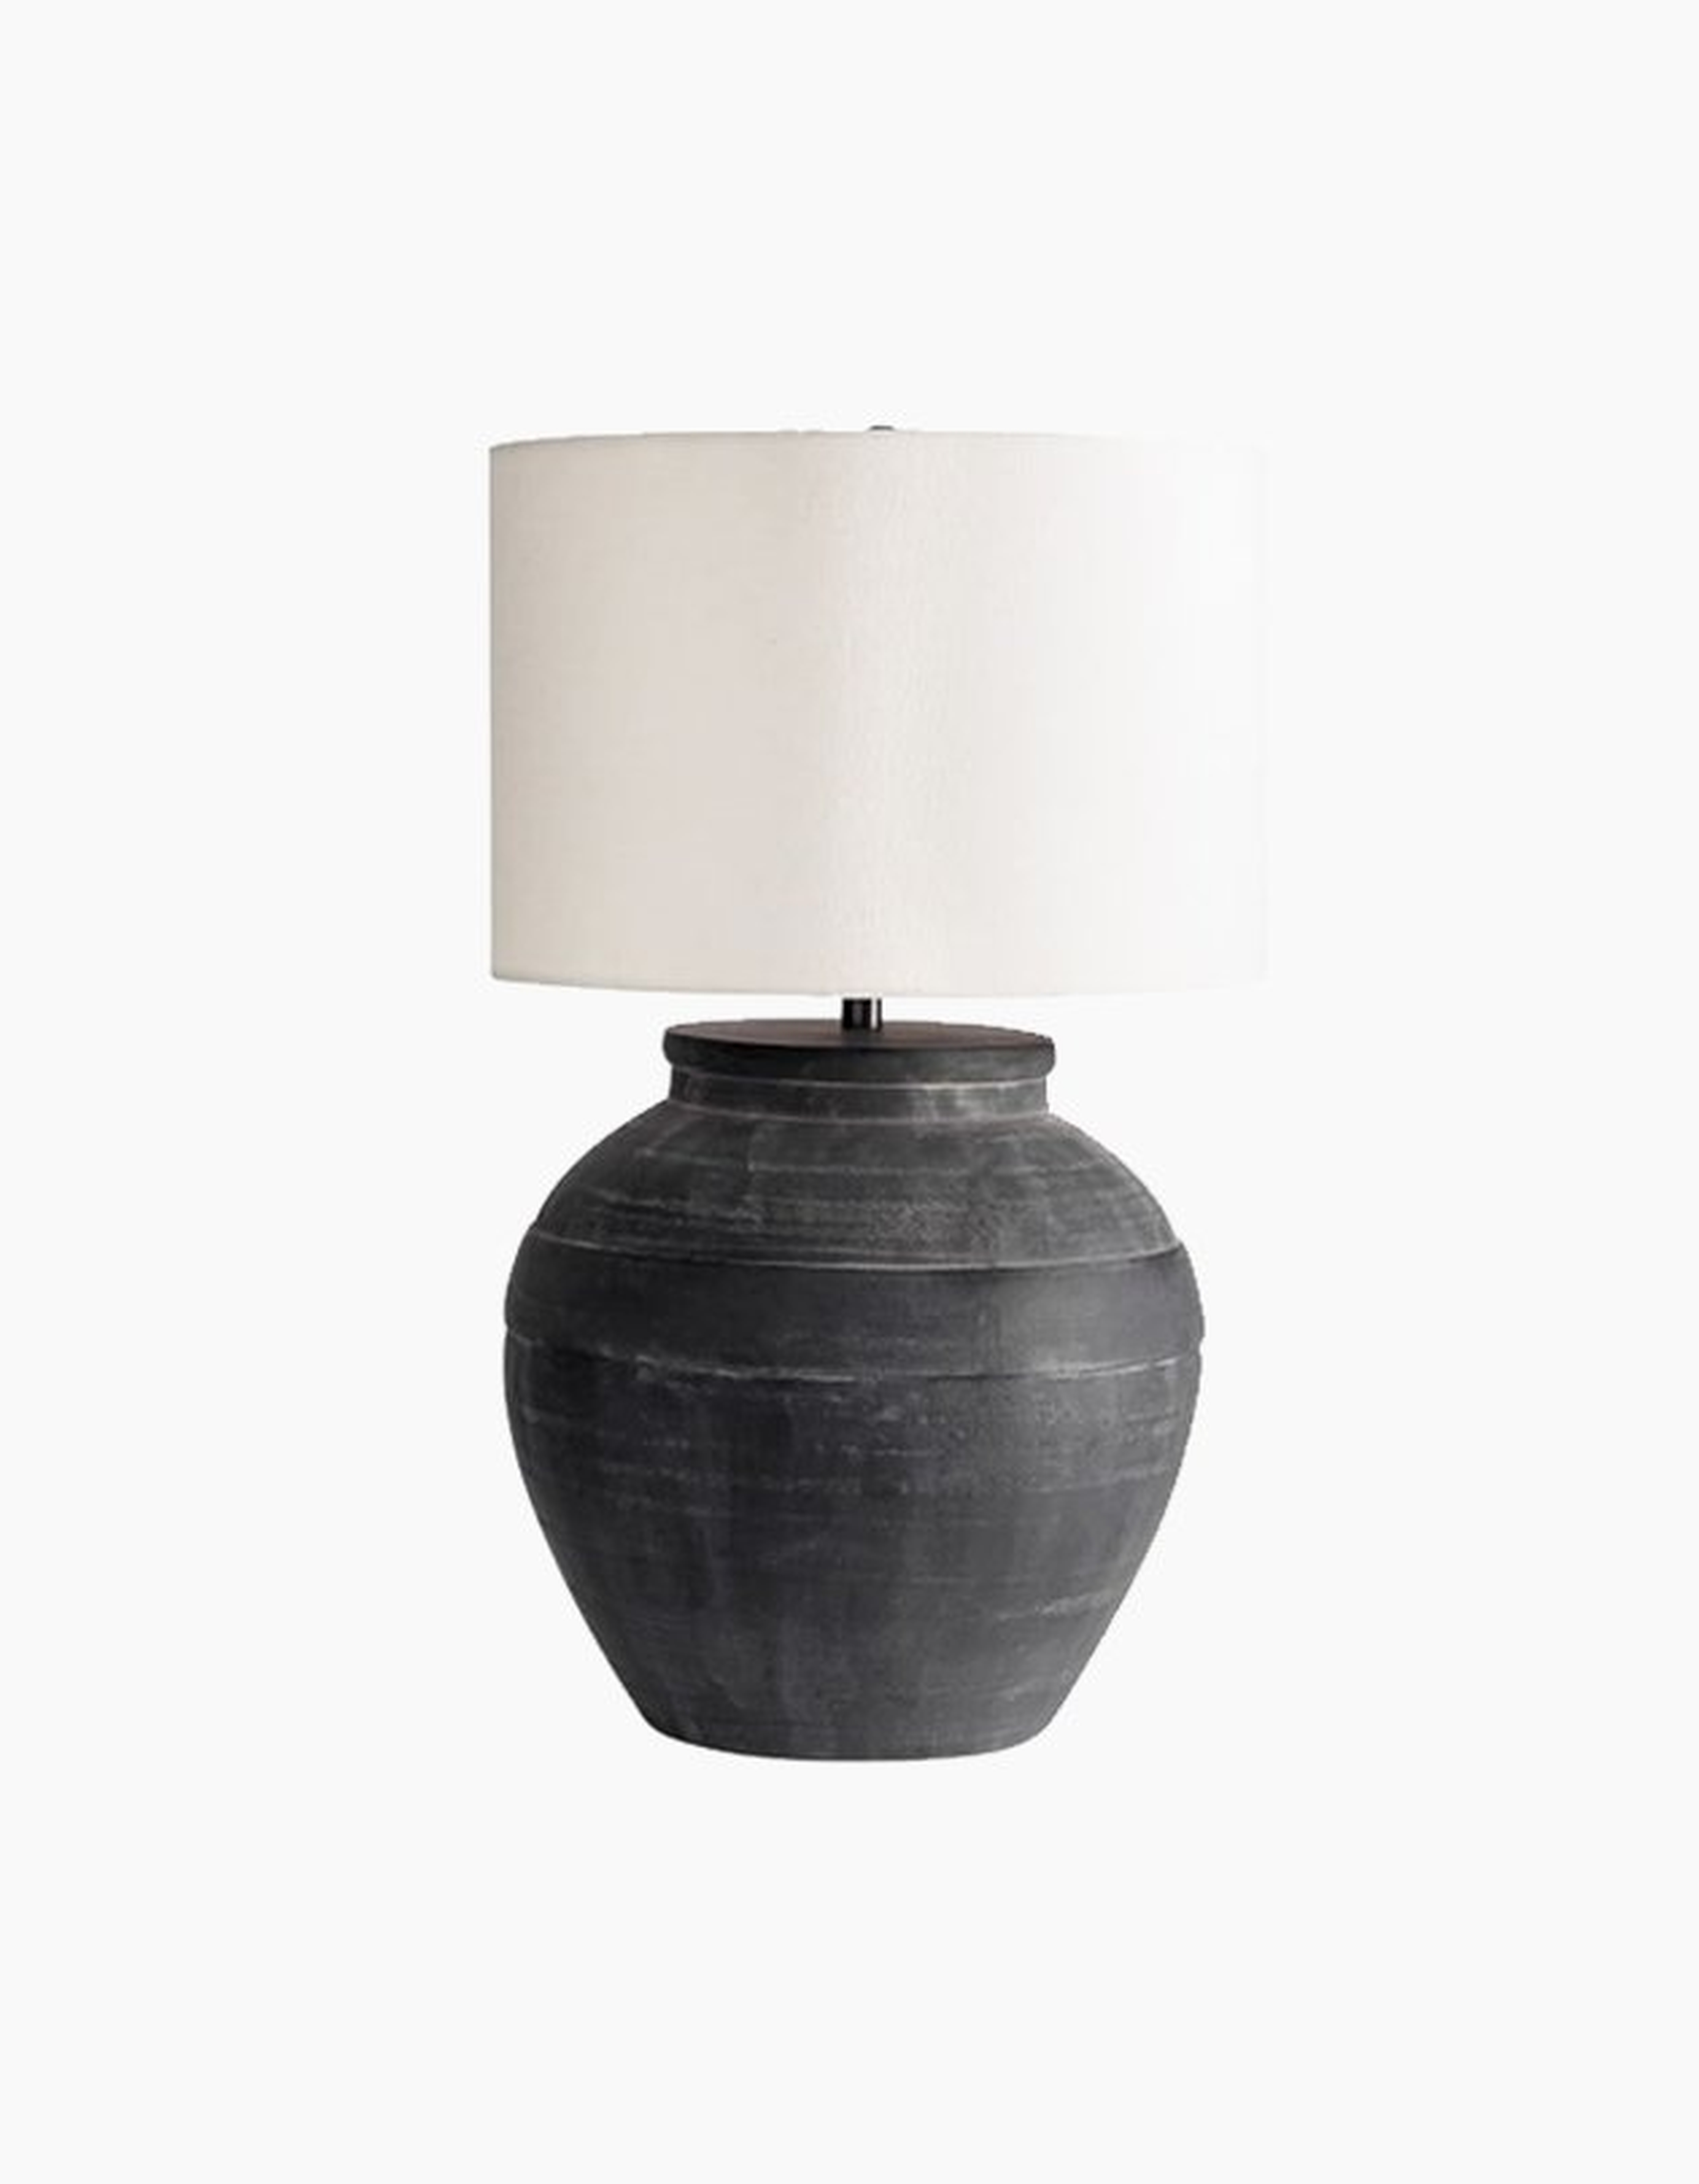 Faris Ceramic Table Lamp, Black, Large - Pottery Barn